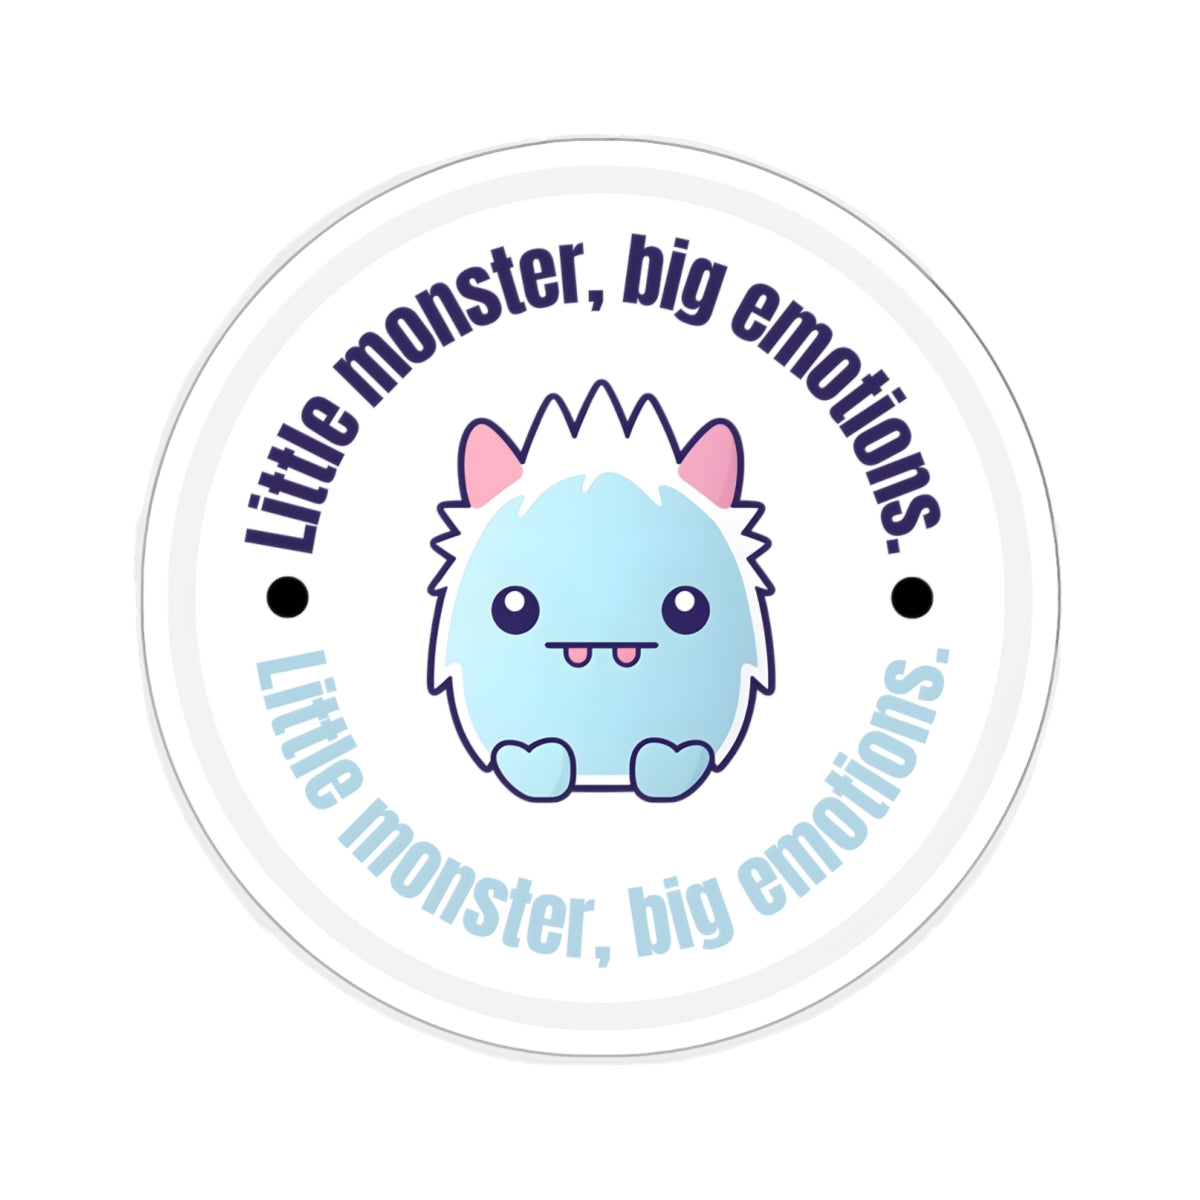 Little monster, big emotions Kiss-Cut Stickers